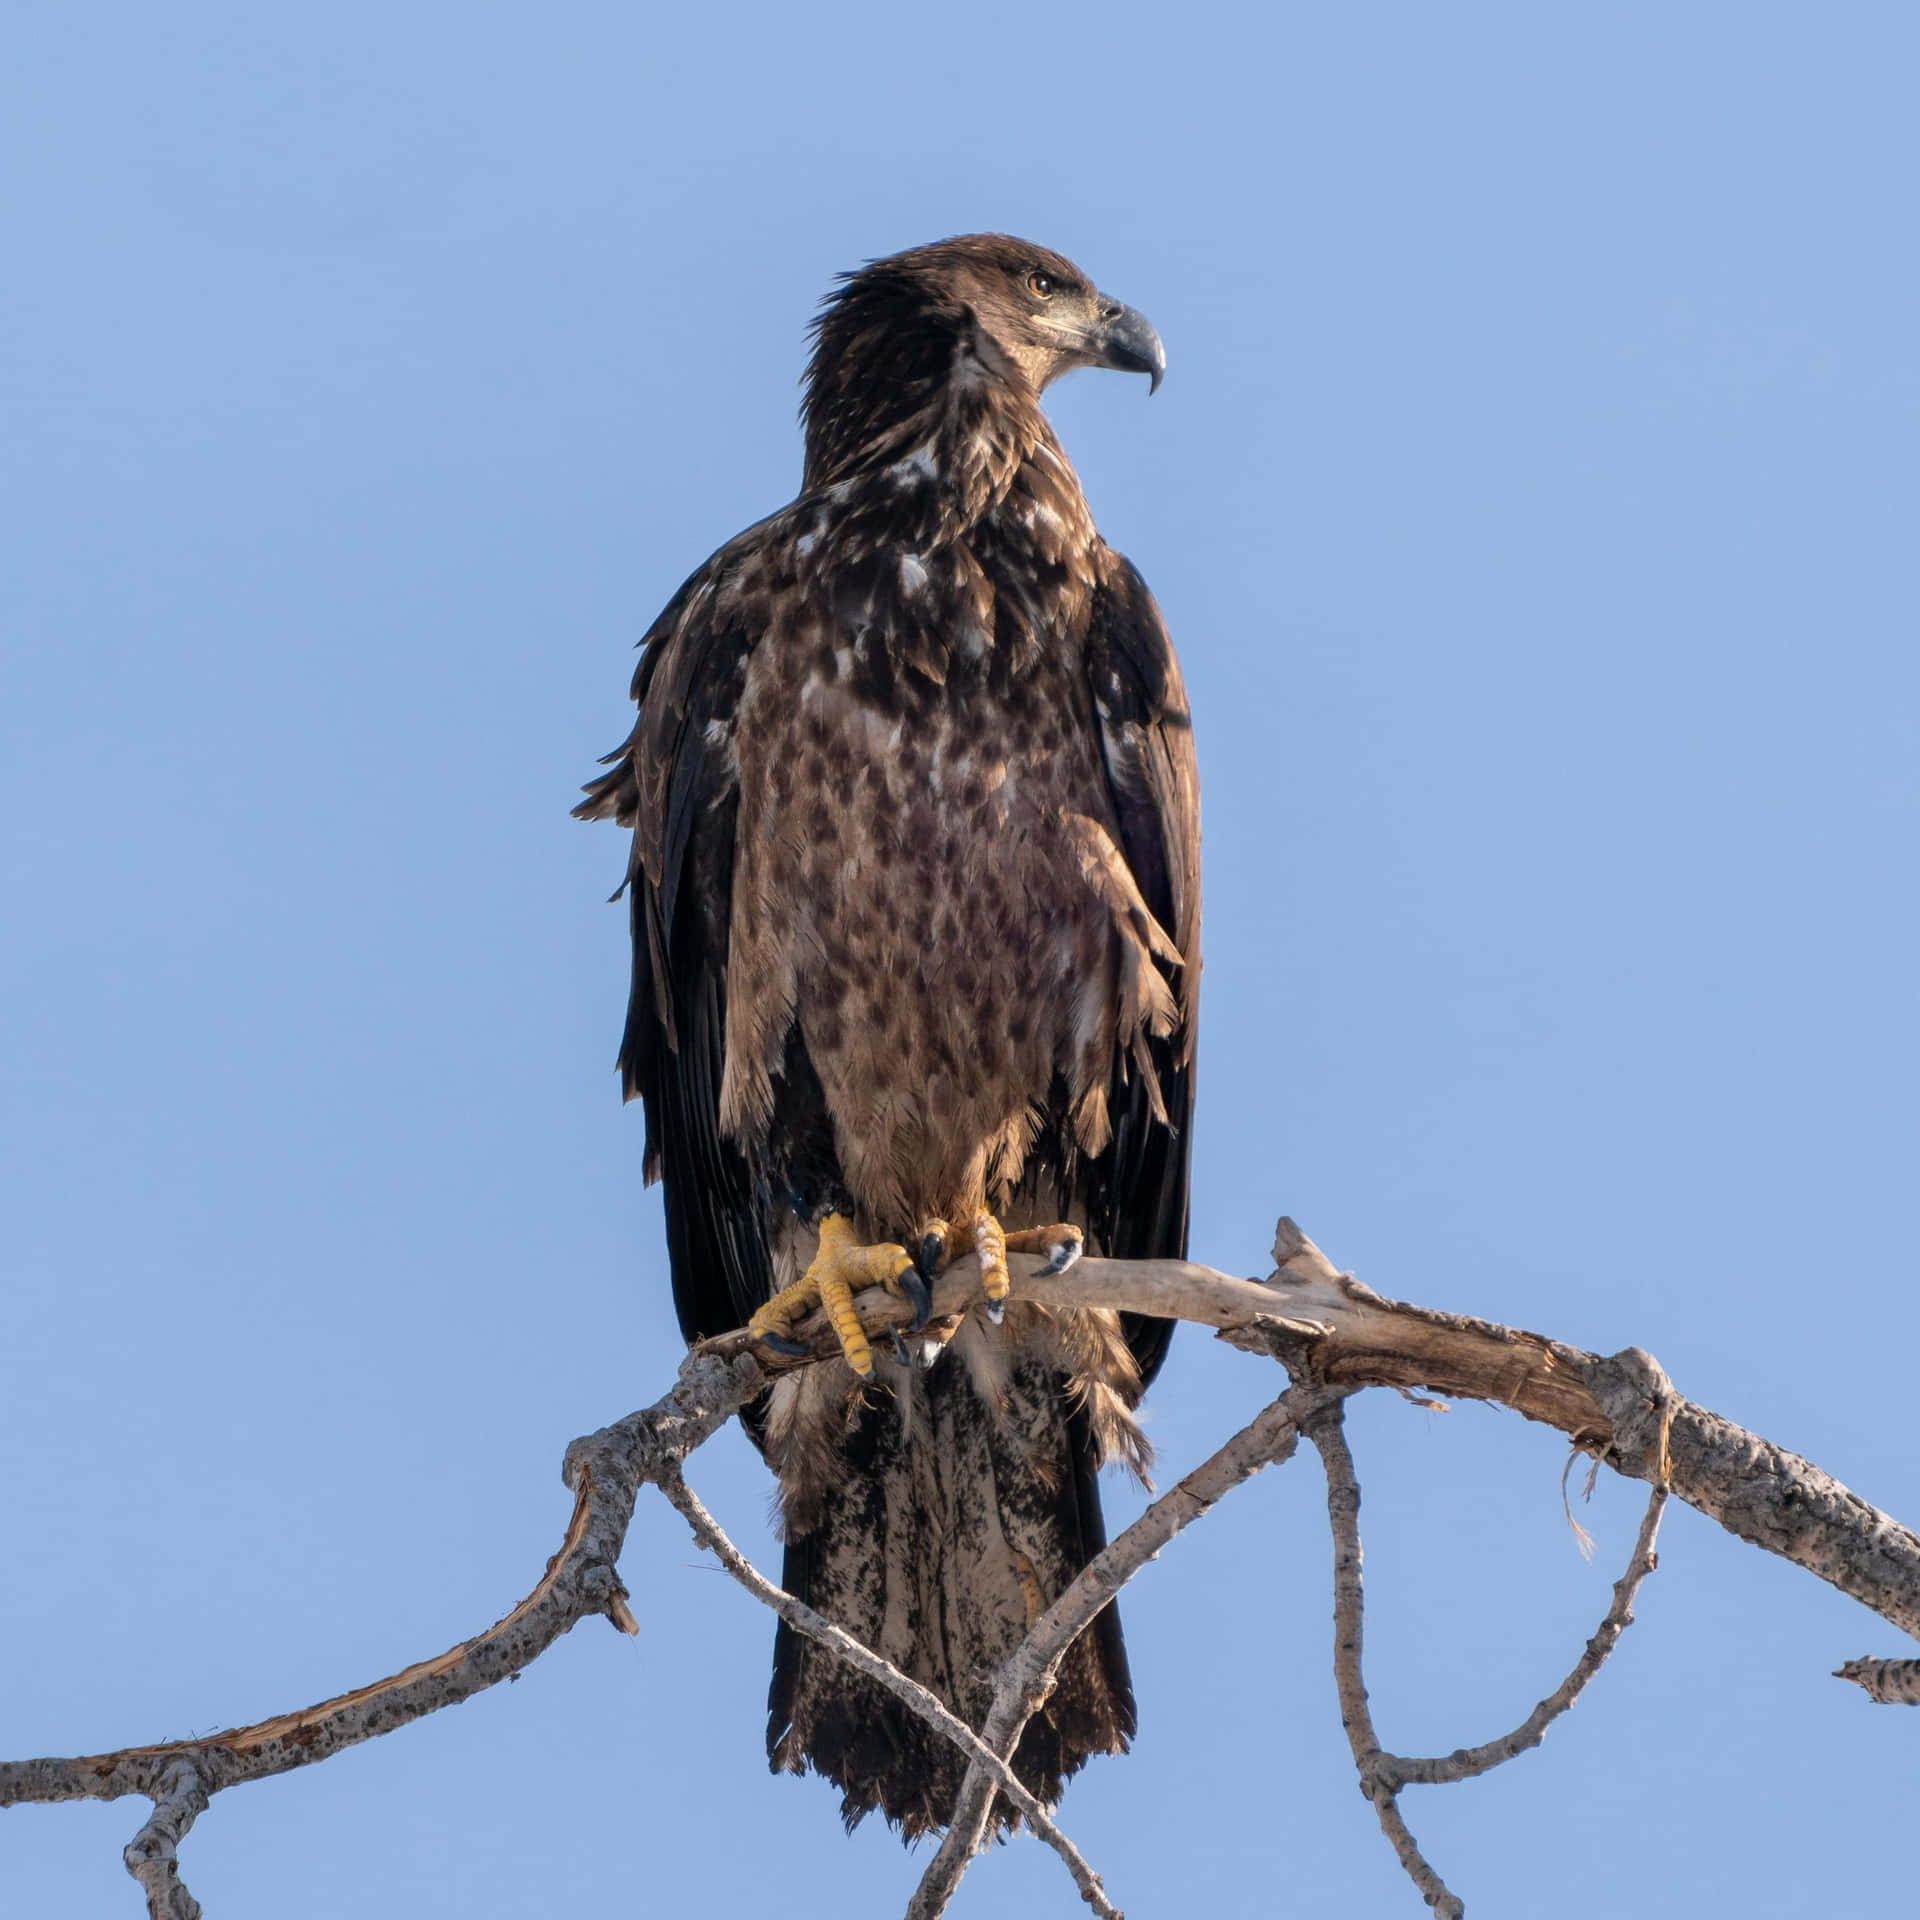 Soaring High - A Young Bald Eagle